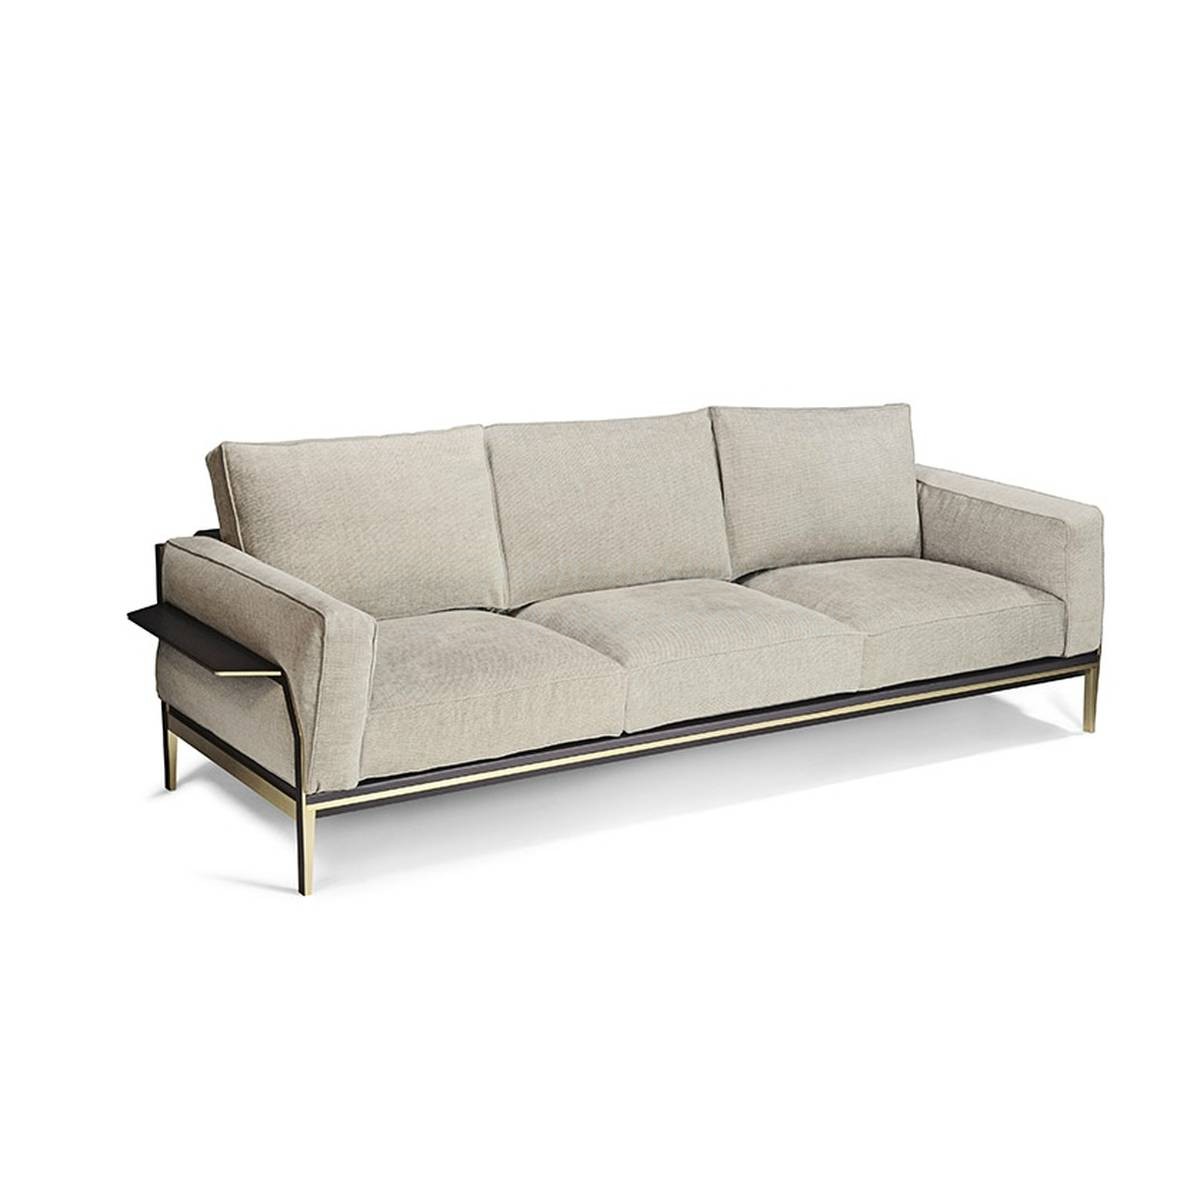 Прямой диван Victor sofa из Италии фабрики PAOLO CASTELLI